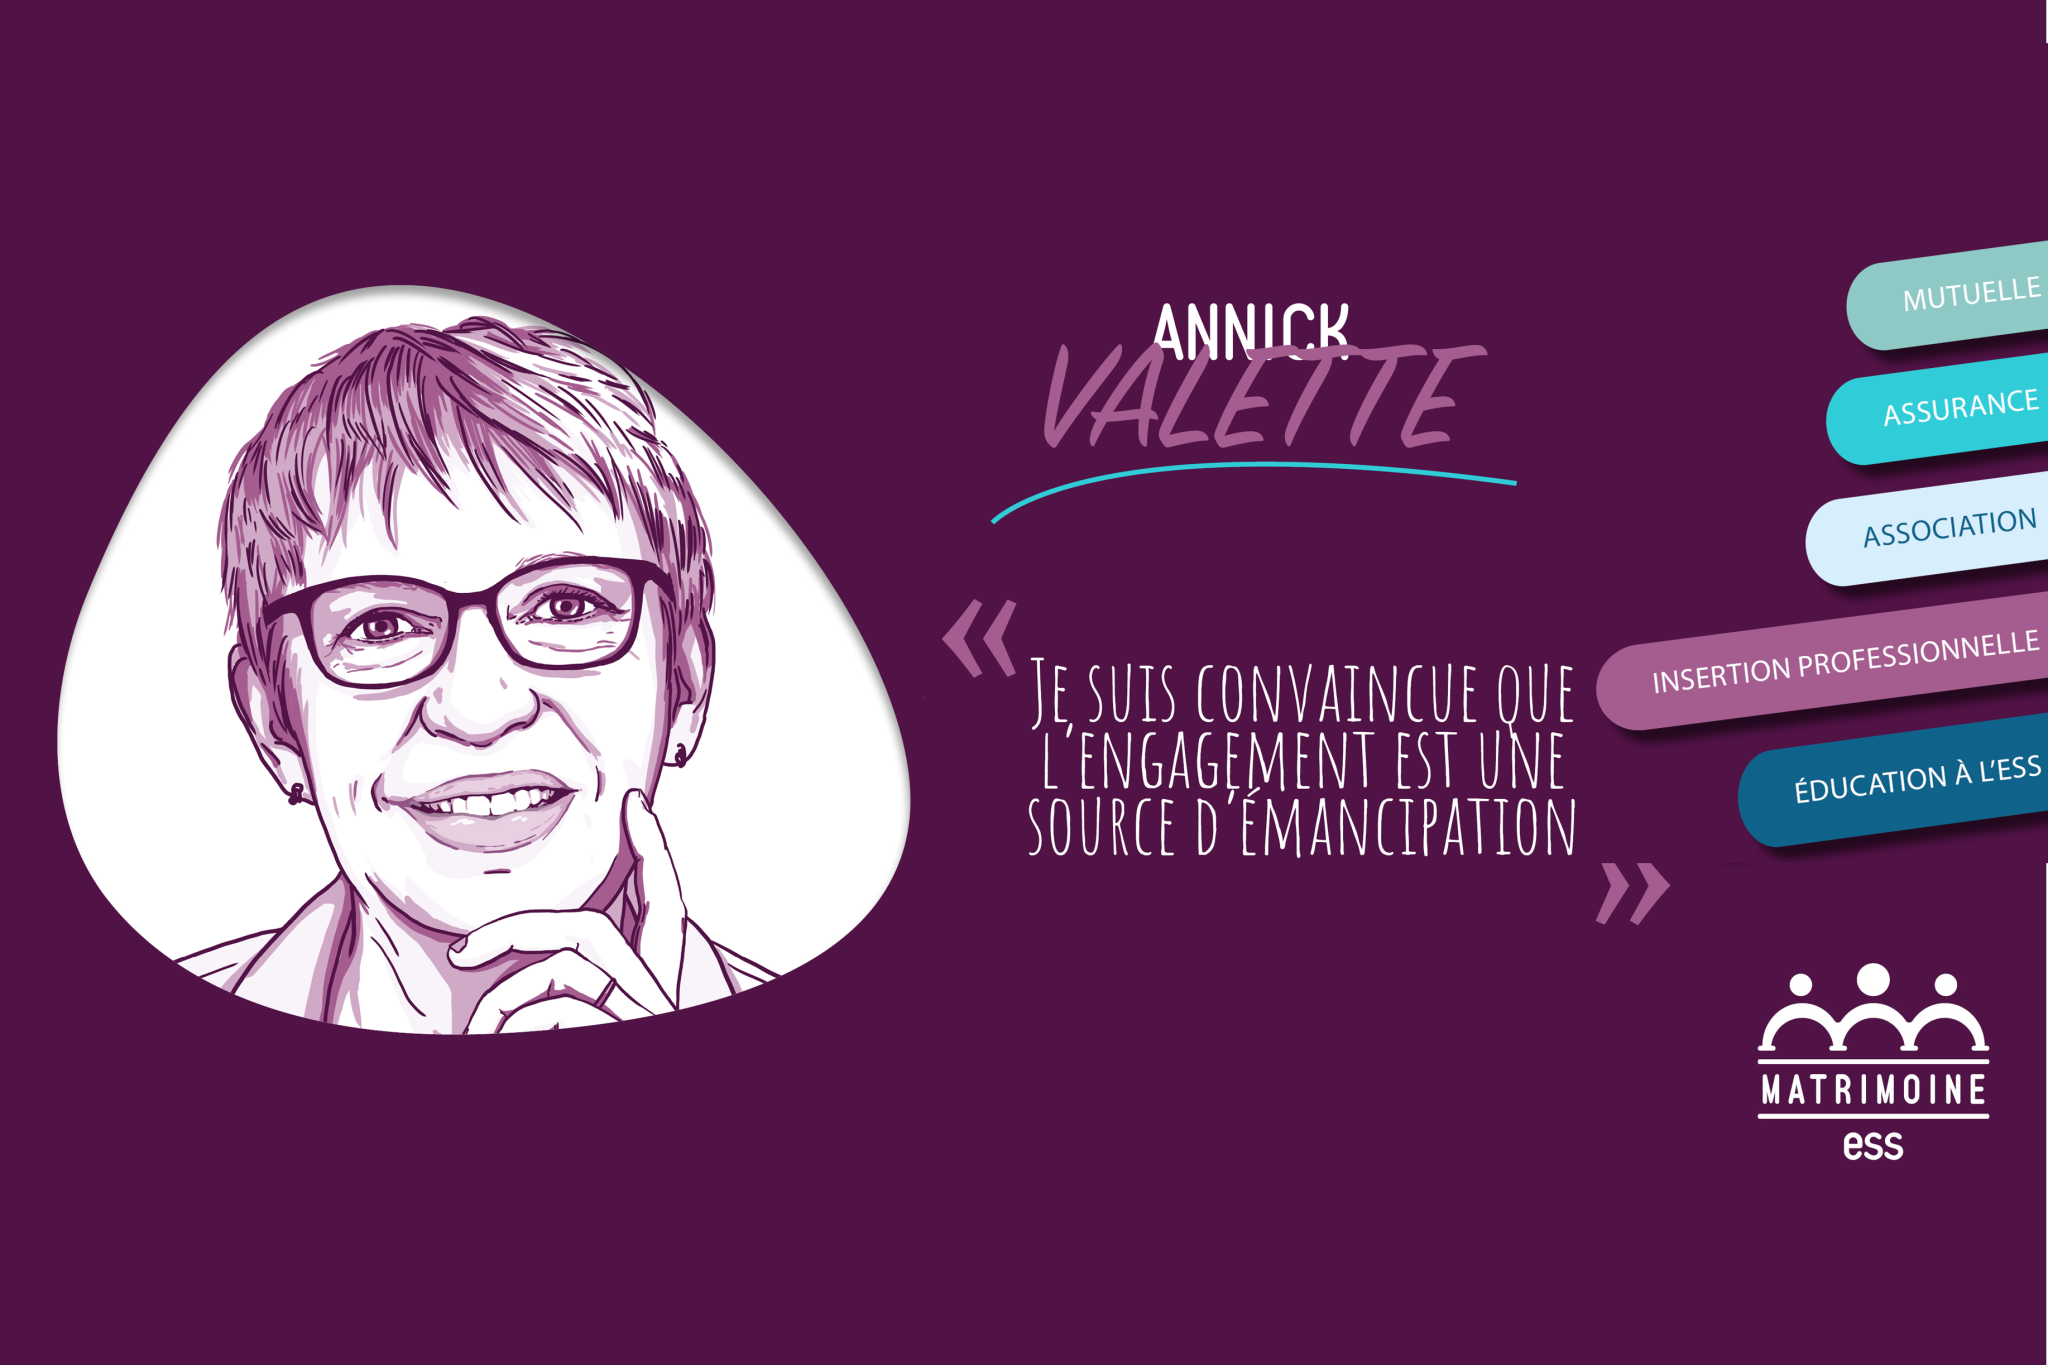 Annick Valette, Vice Présidente de la MAIF